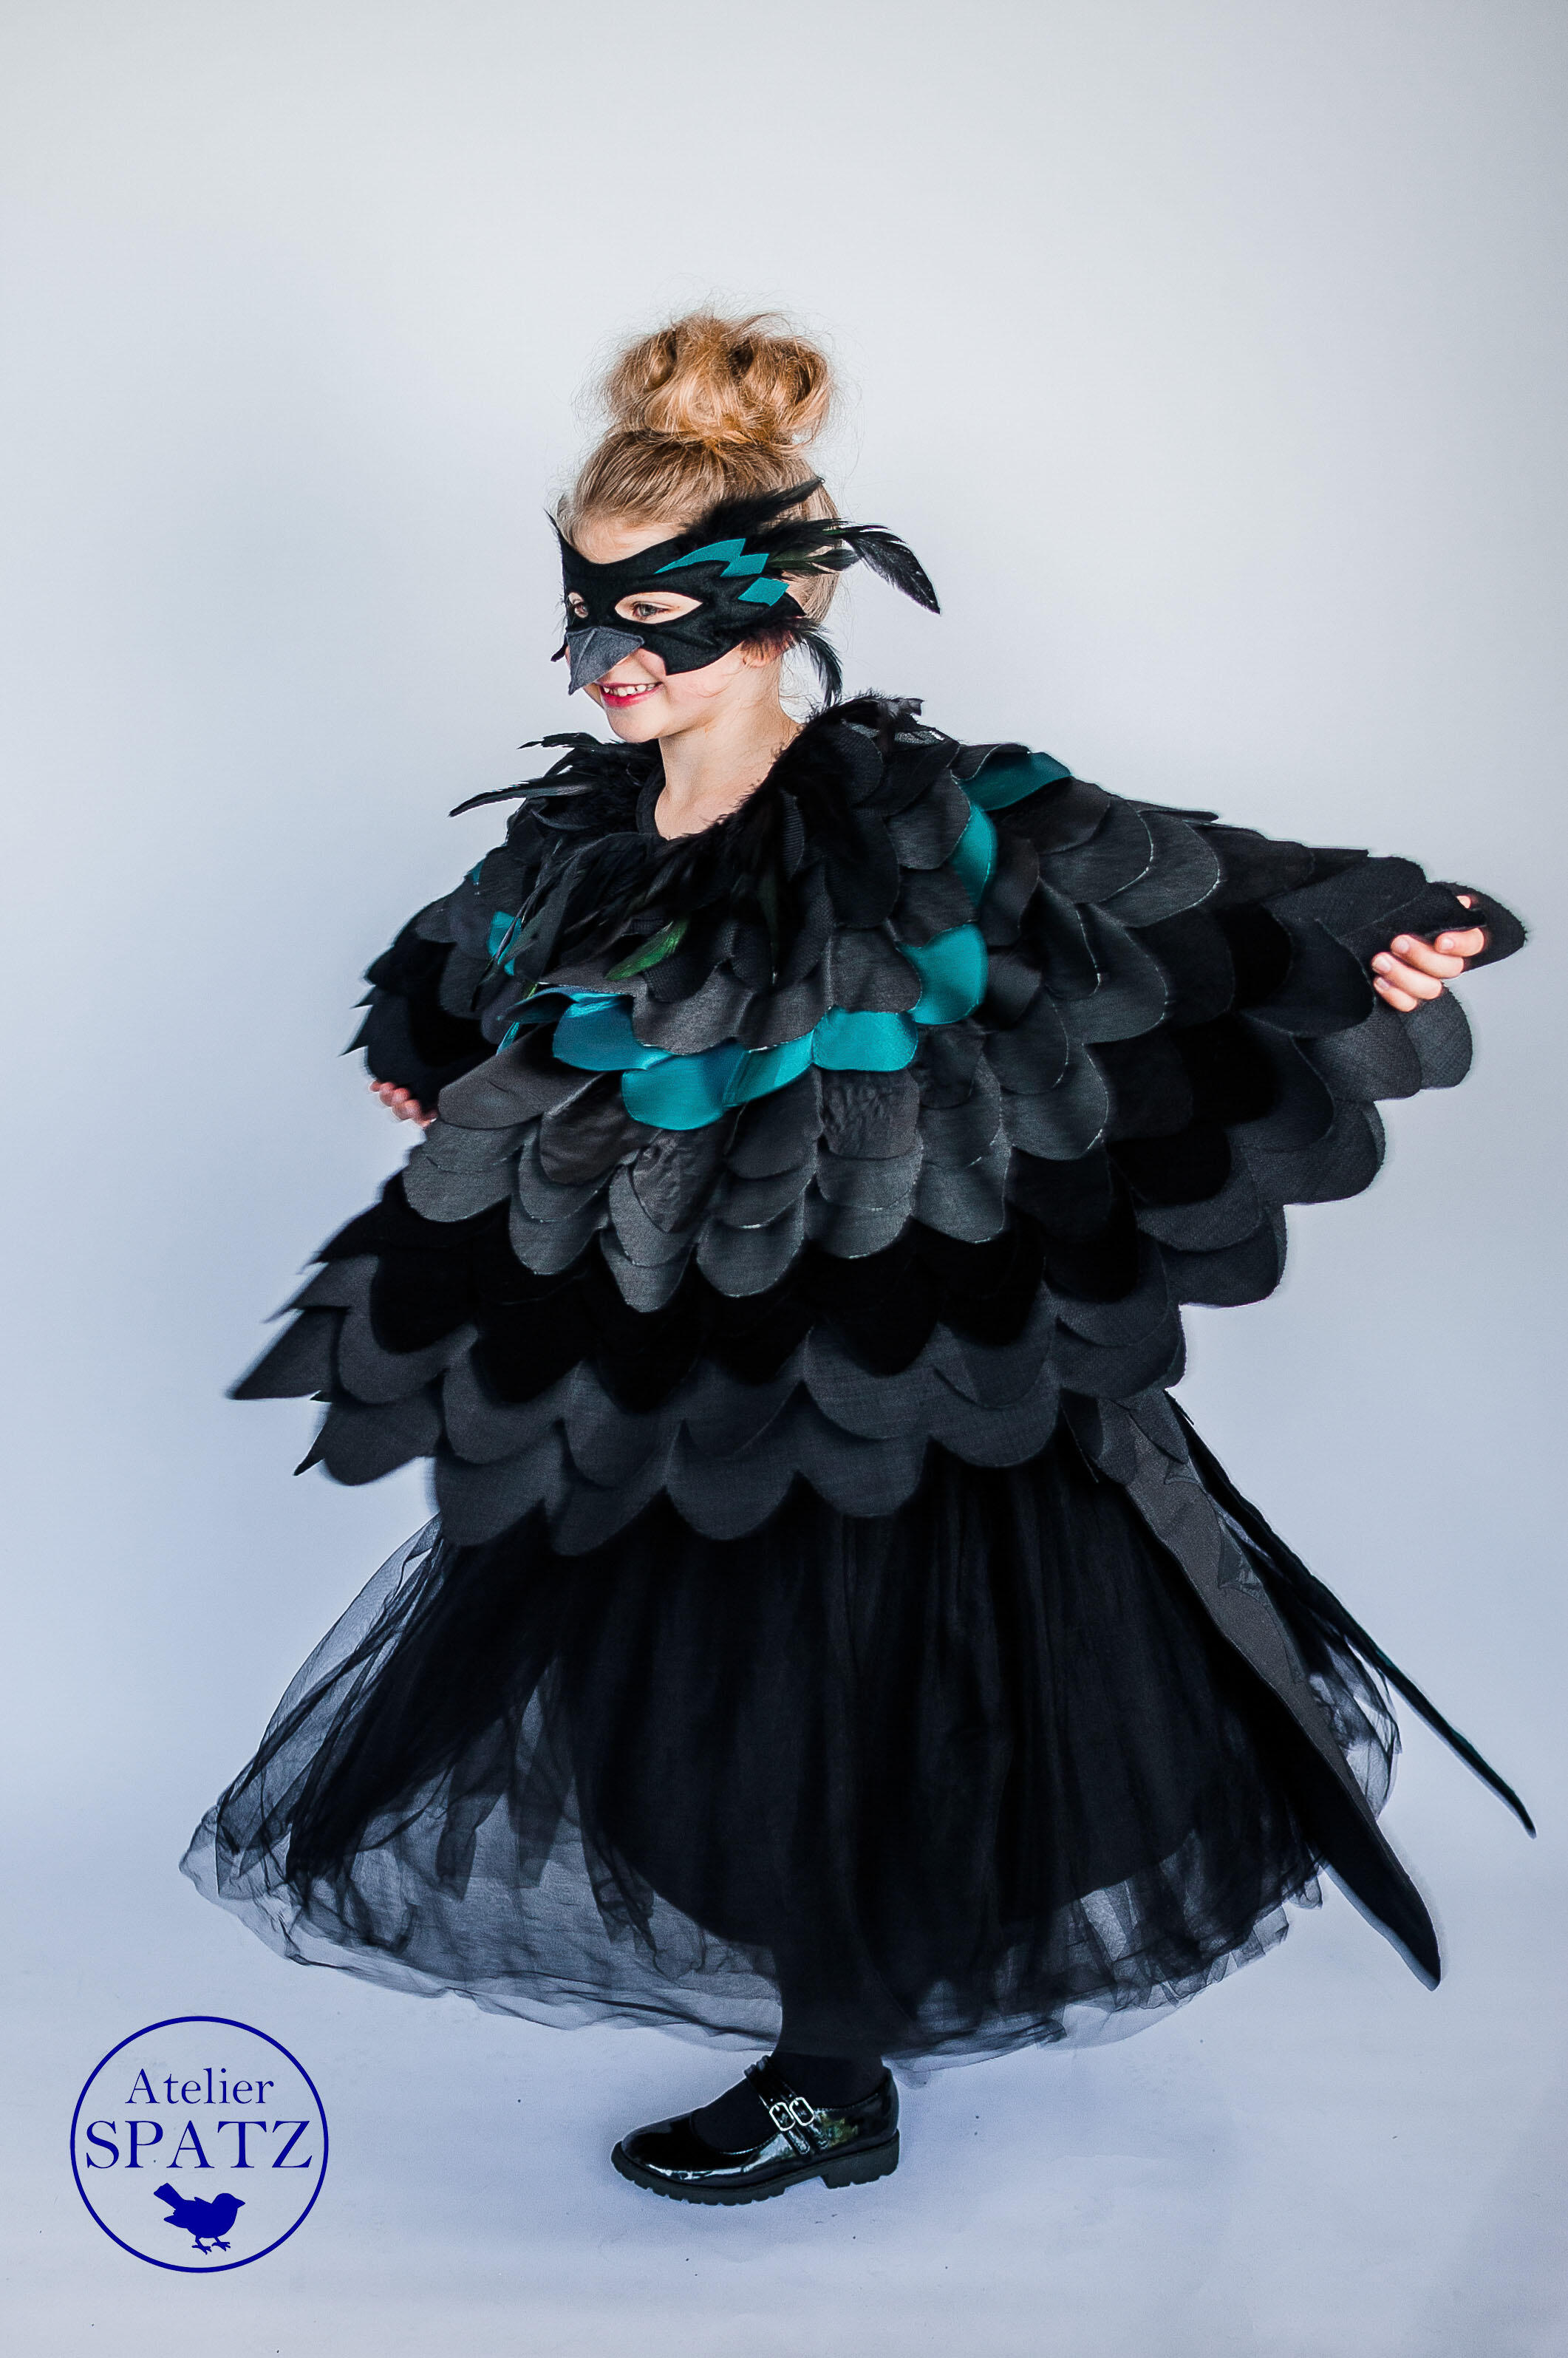 Little raven bird costume for kids in carnival or halloween